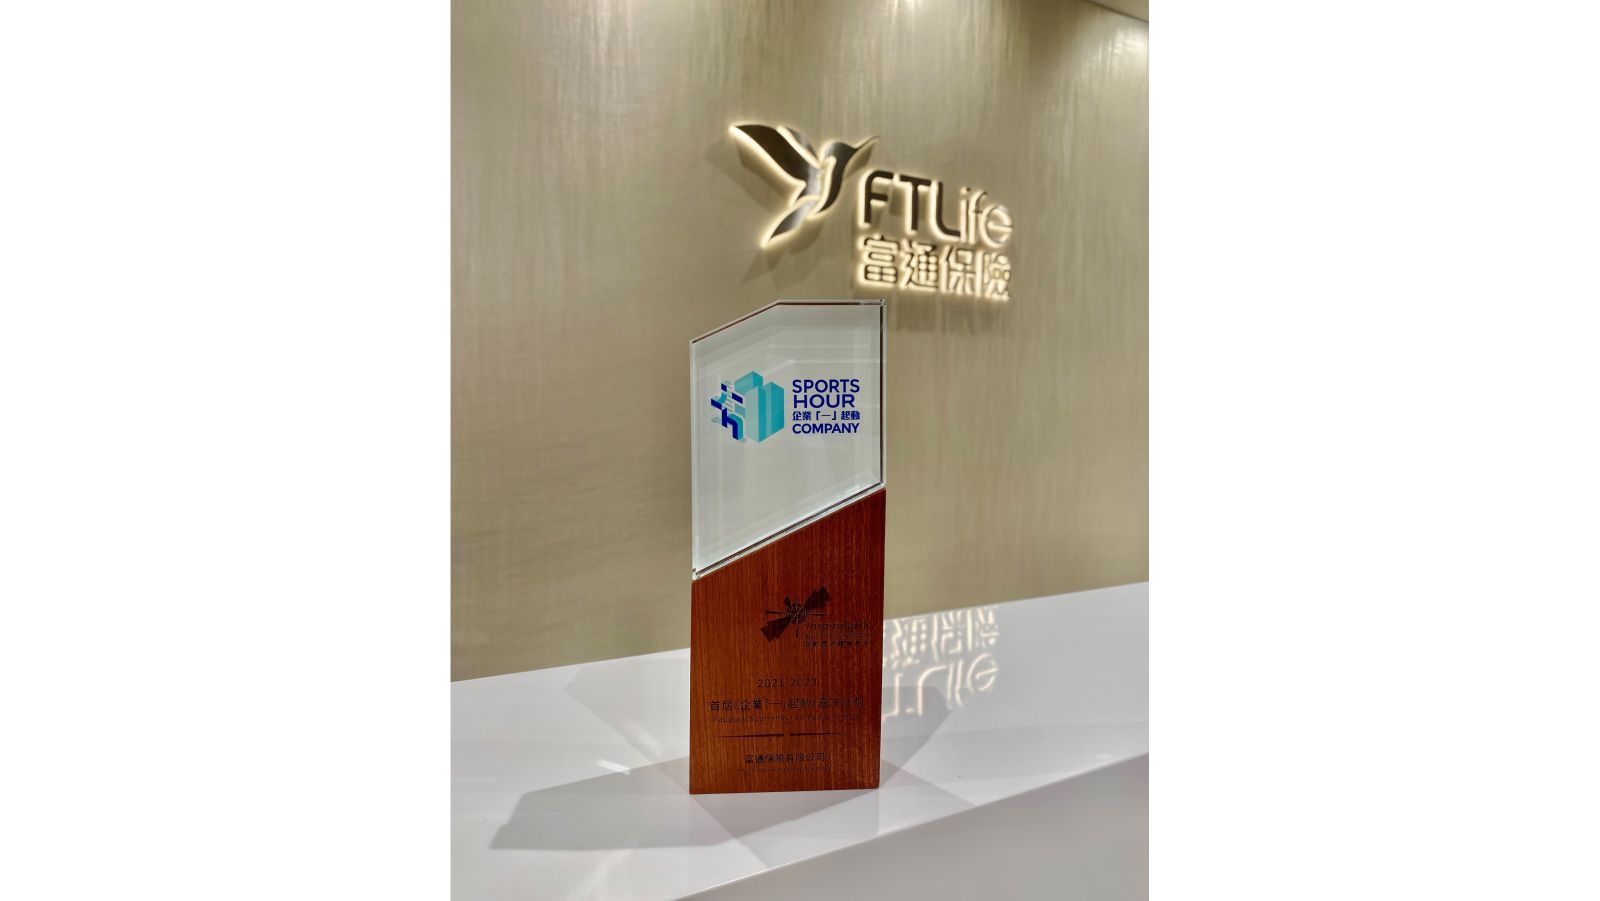 FTLife was recognized in “SportsHour Company Scheme”